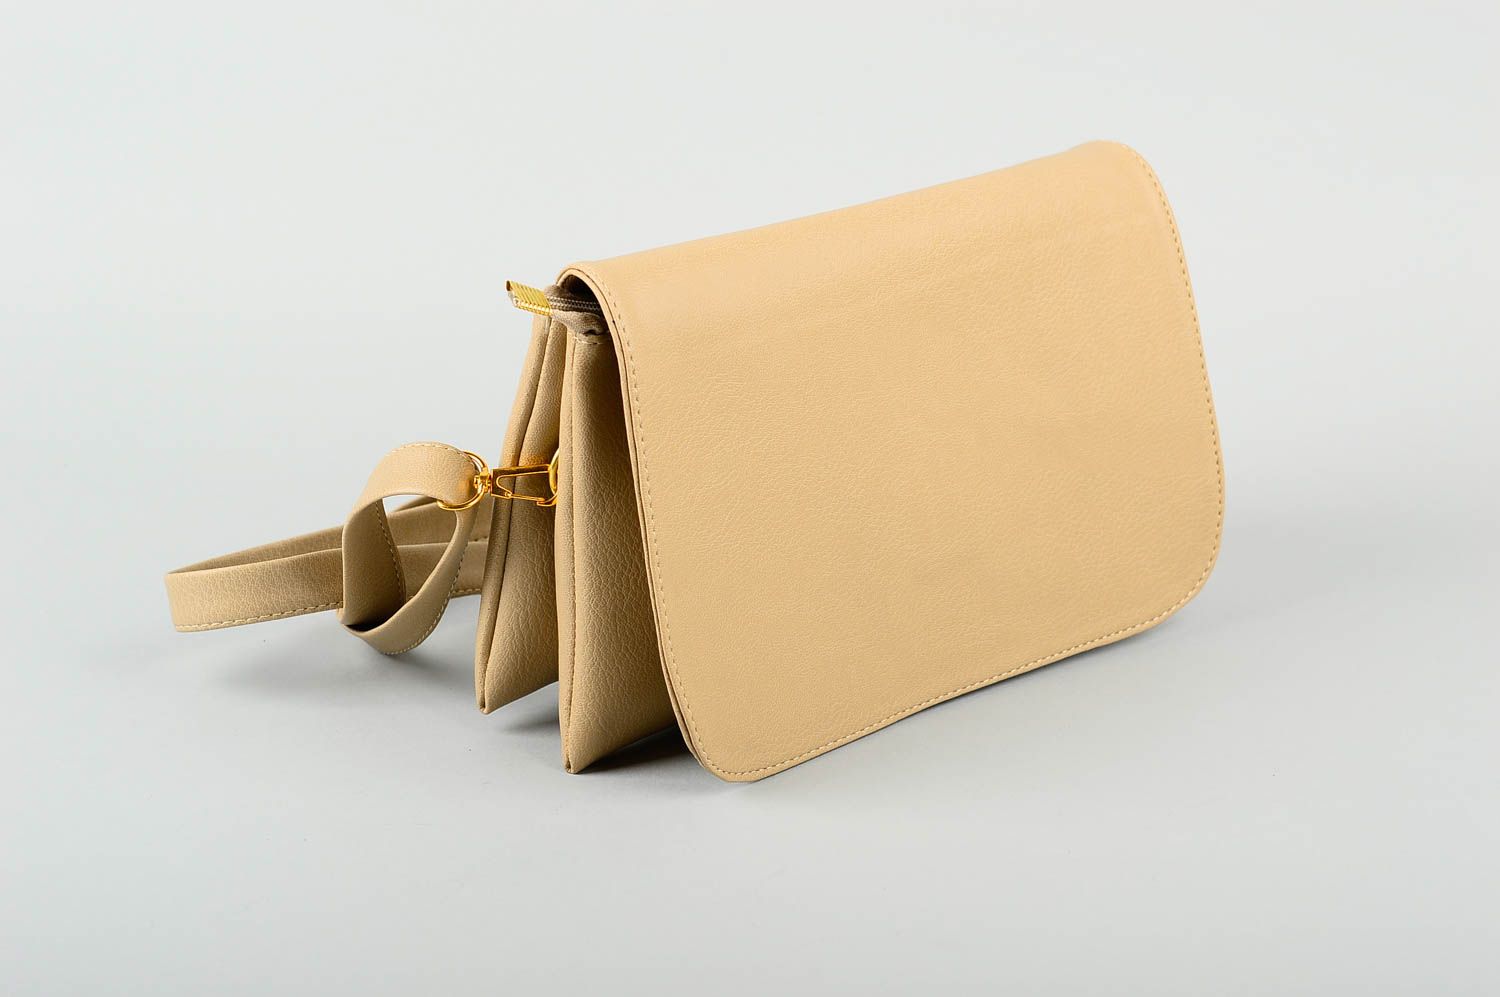 Unusual handmade bag design leather shoulder bag leather goods gifts for her photo 1